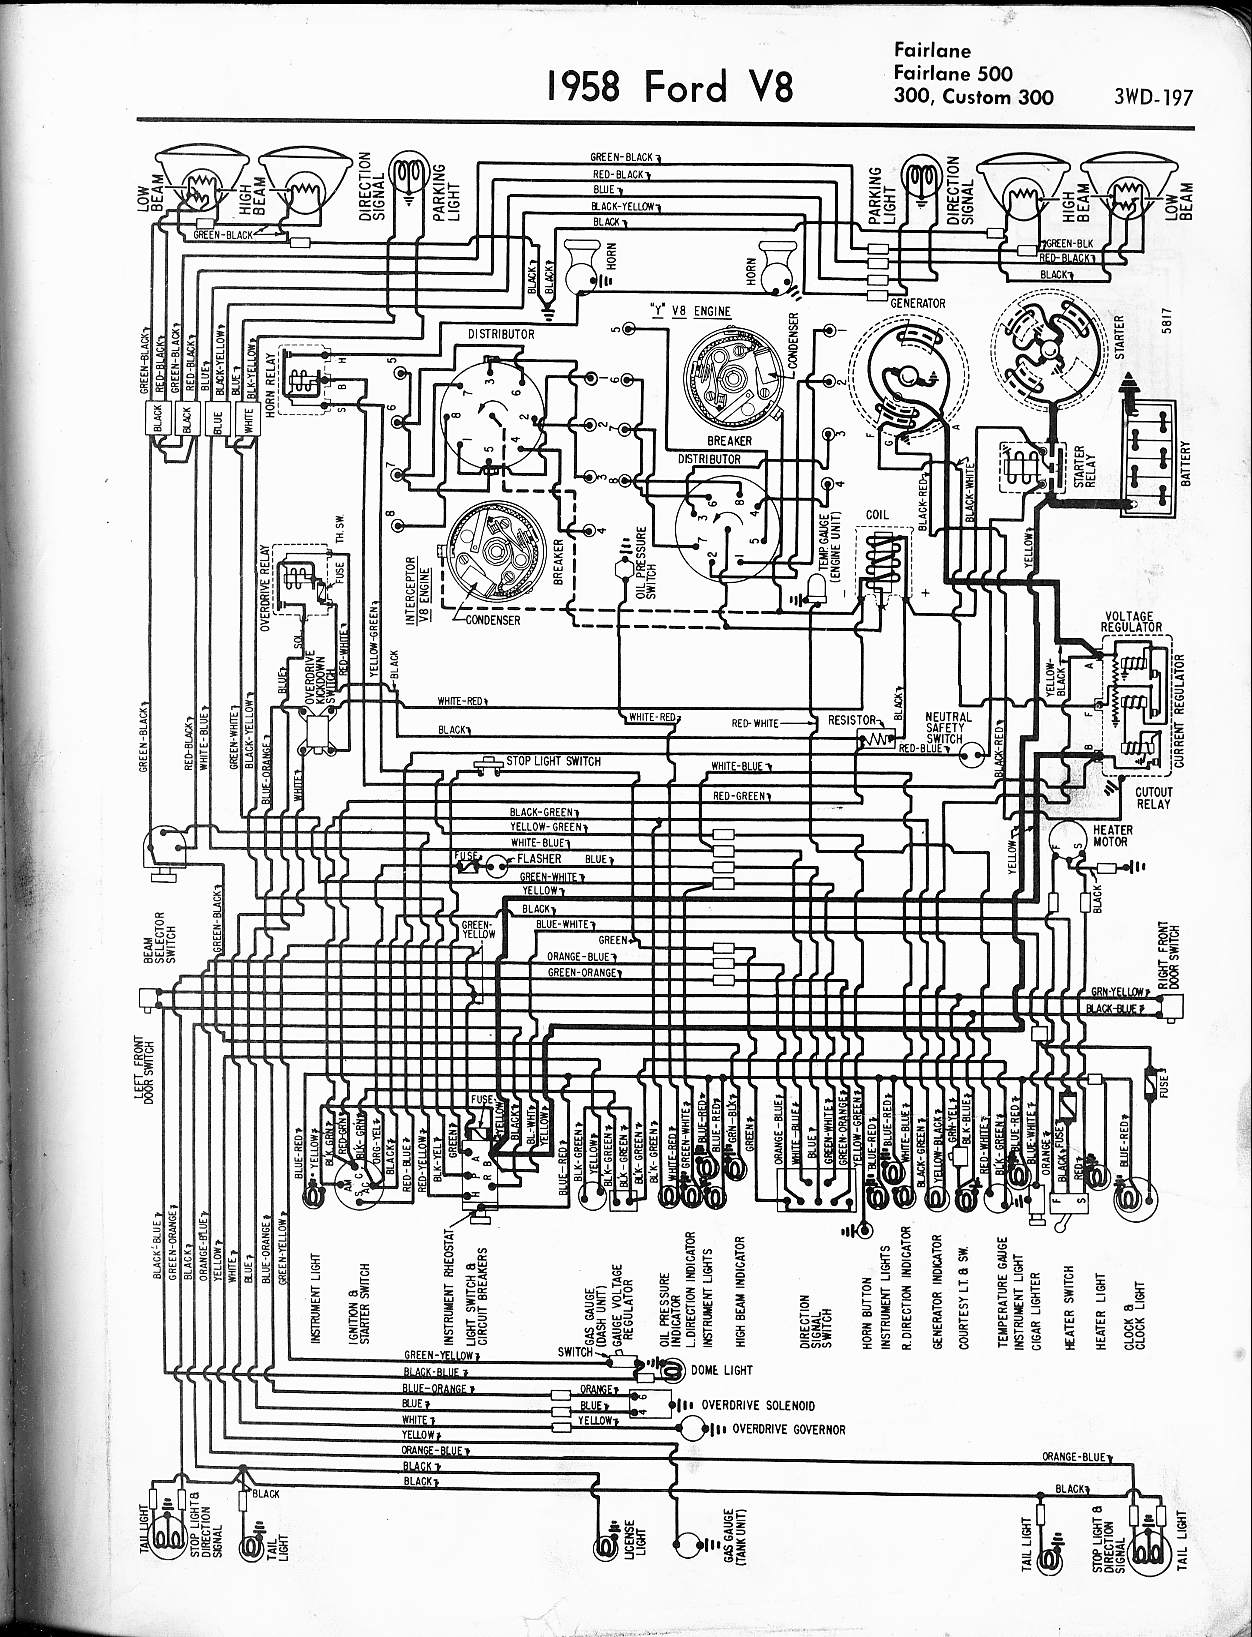 Ford free schematic wiring